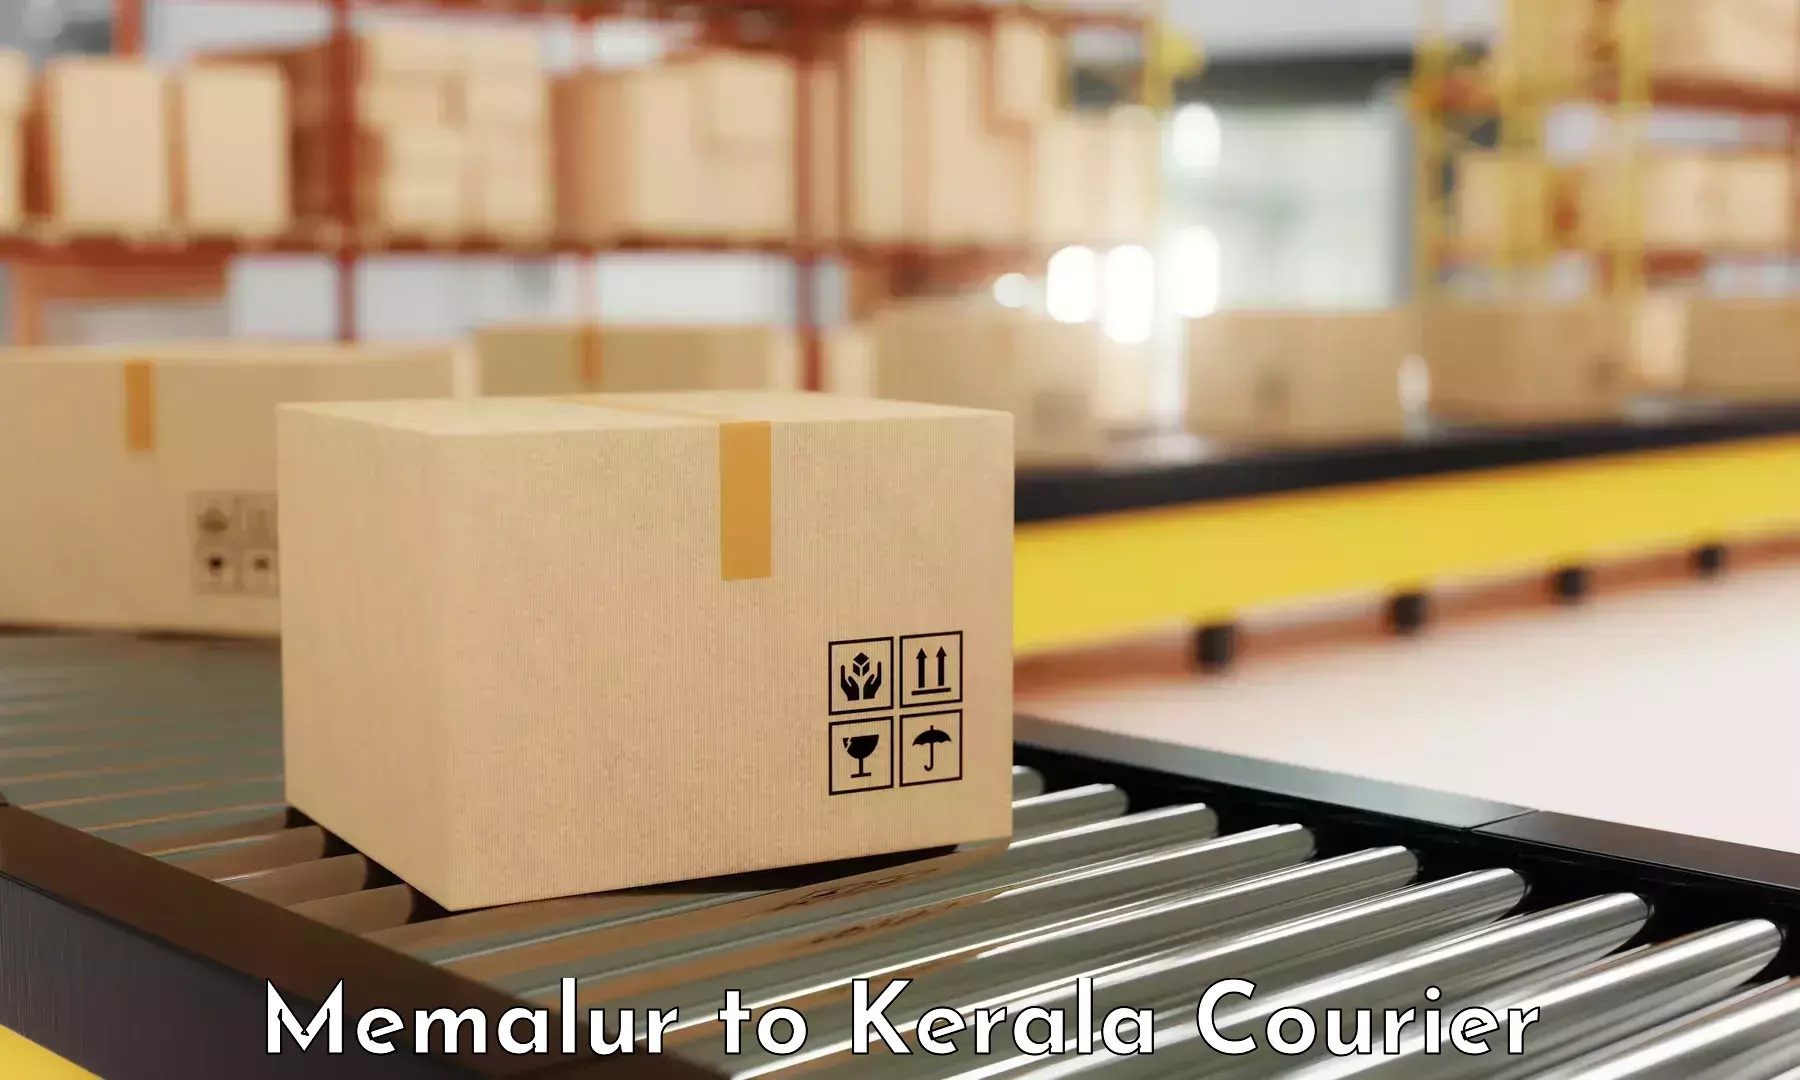 International courier networks Memalur to Kattappana